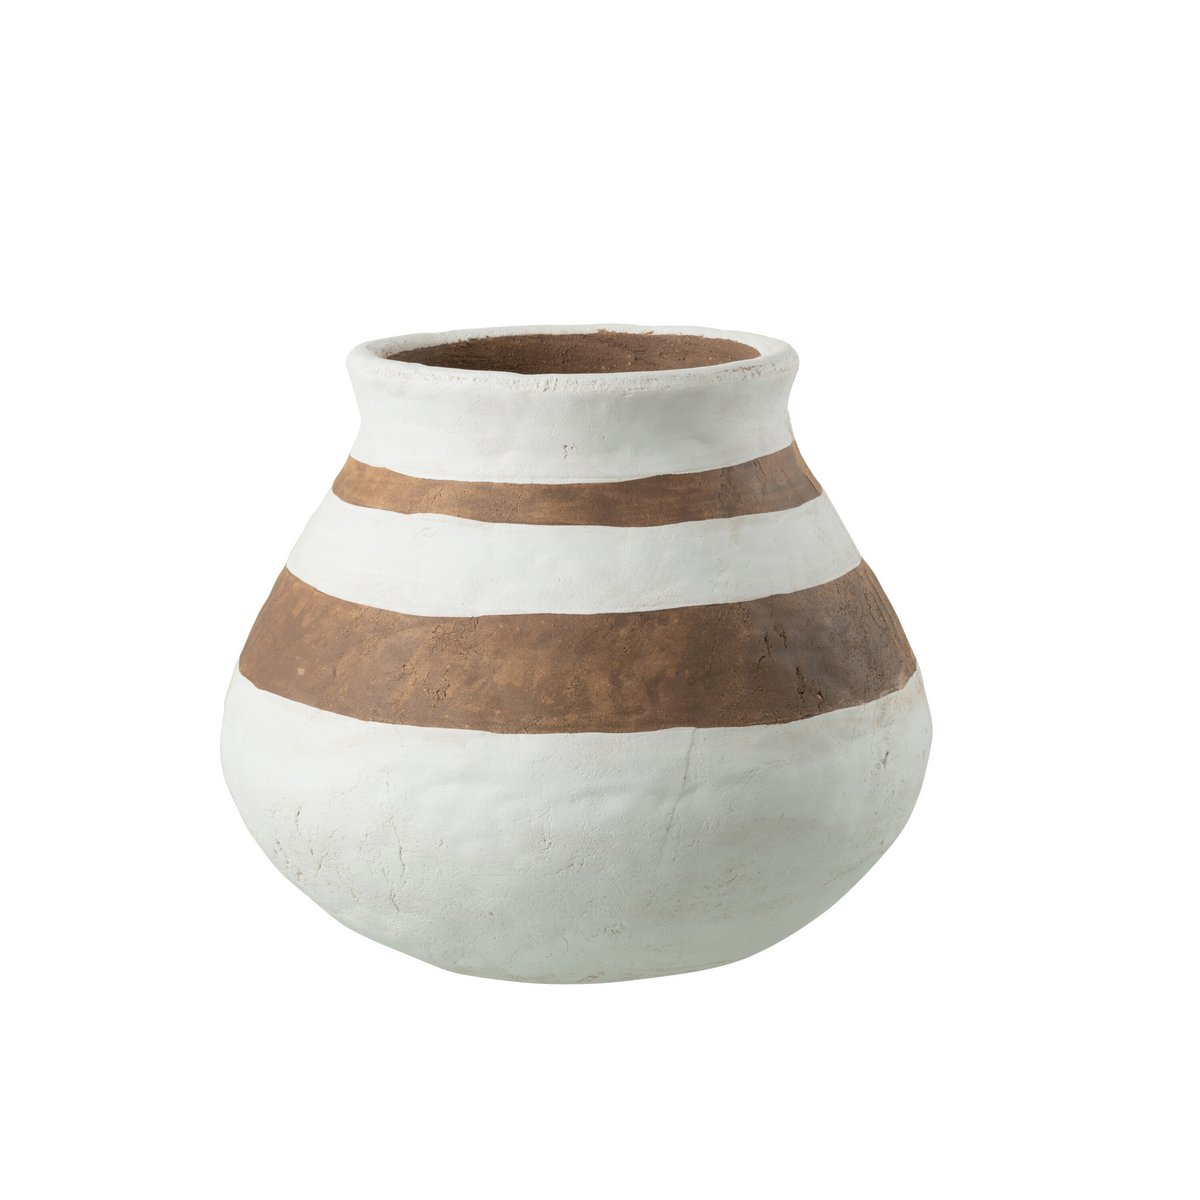 Vase Kenya Low - Keramik, weiß/braun, groß